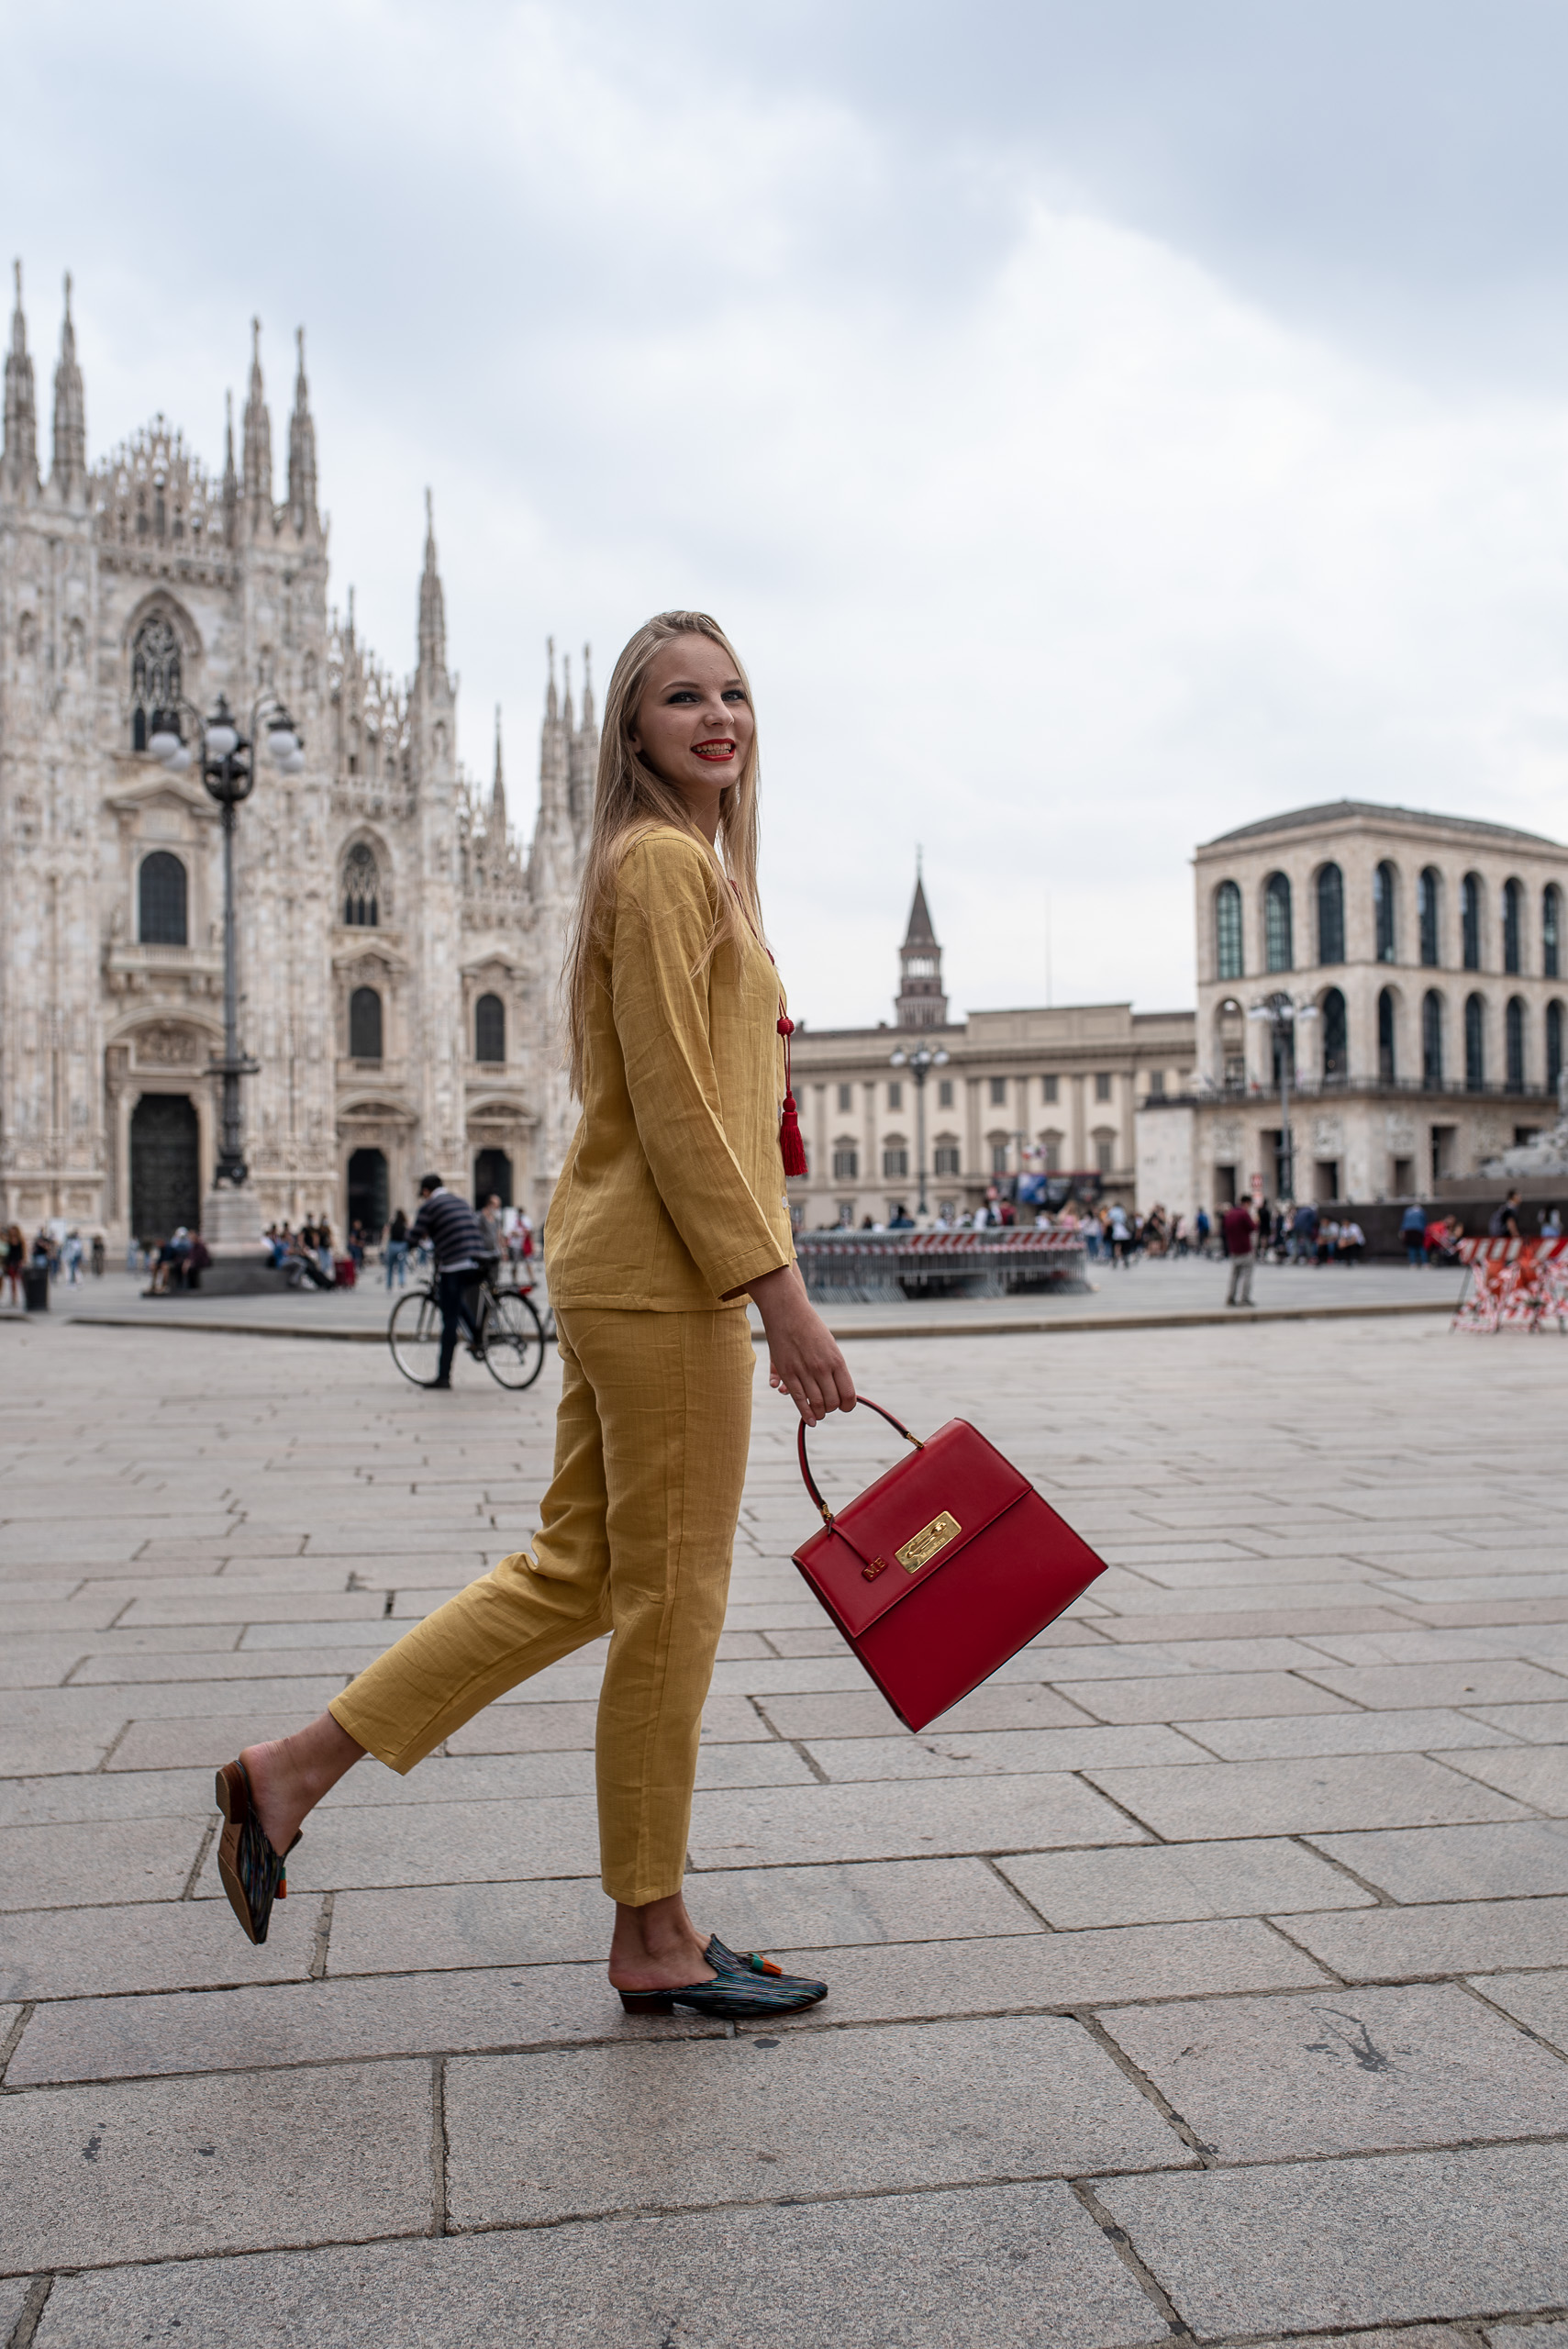 Marosetti Borse con la testimonial Elisa Caterina Egger alla Milano Fashion Week 2020 (5)